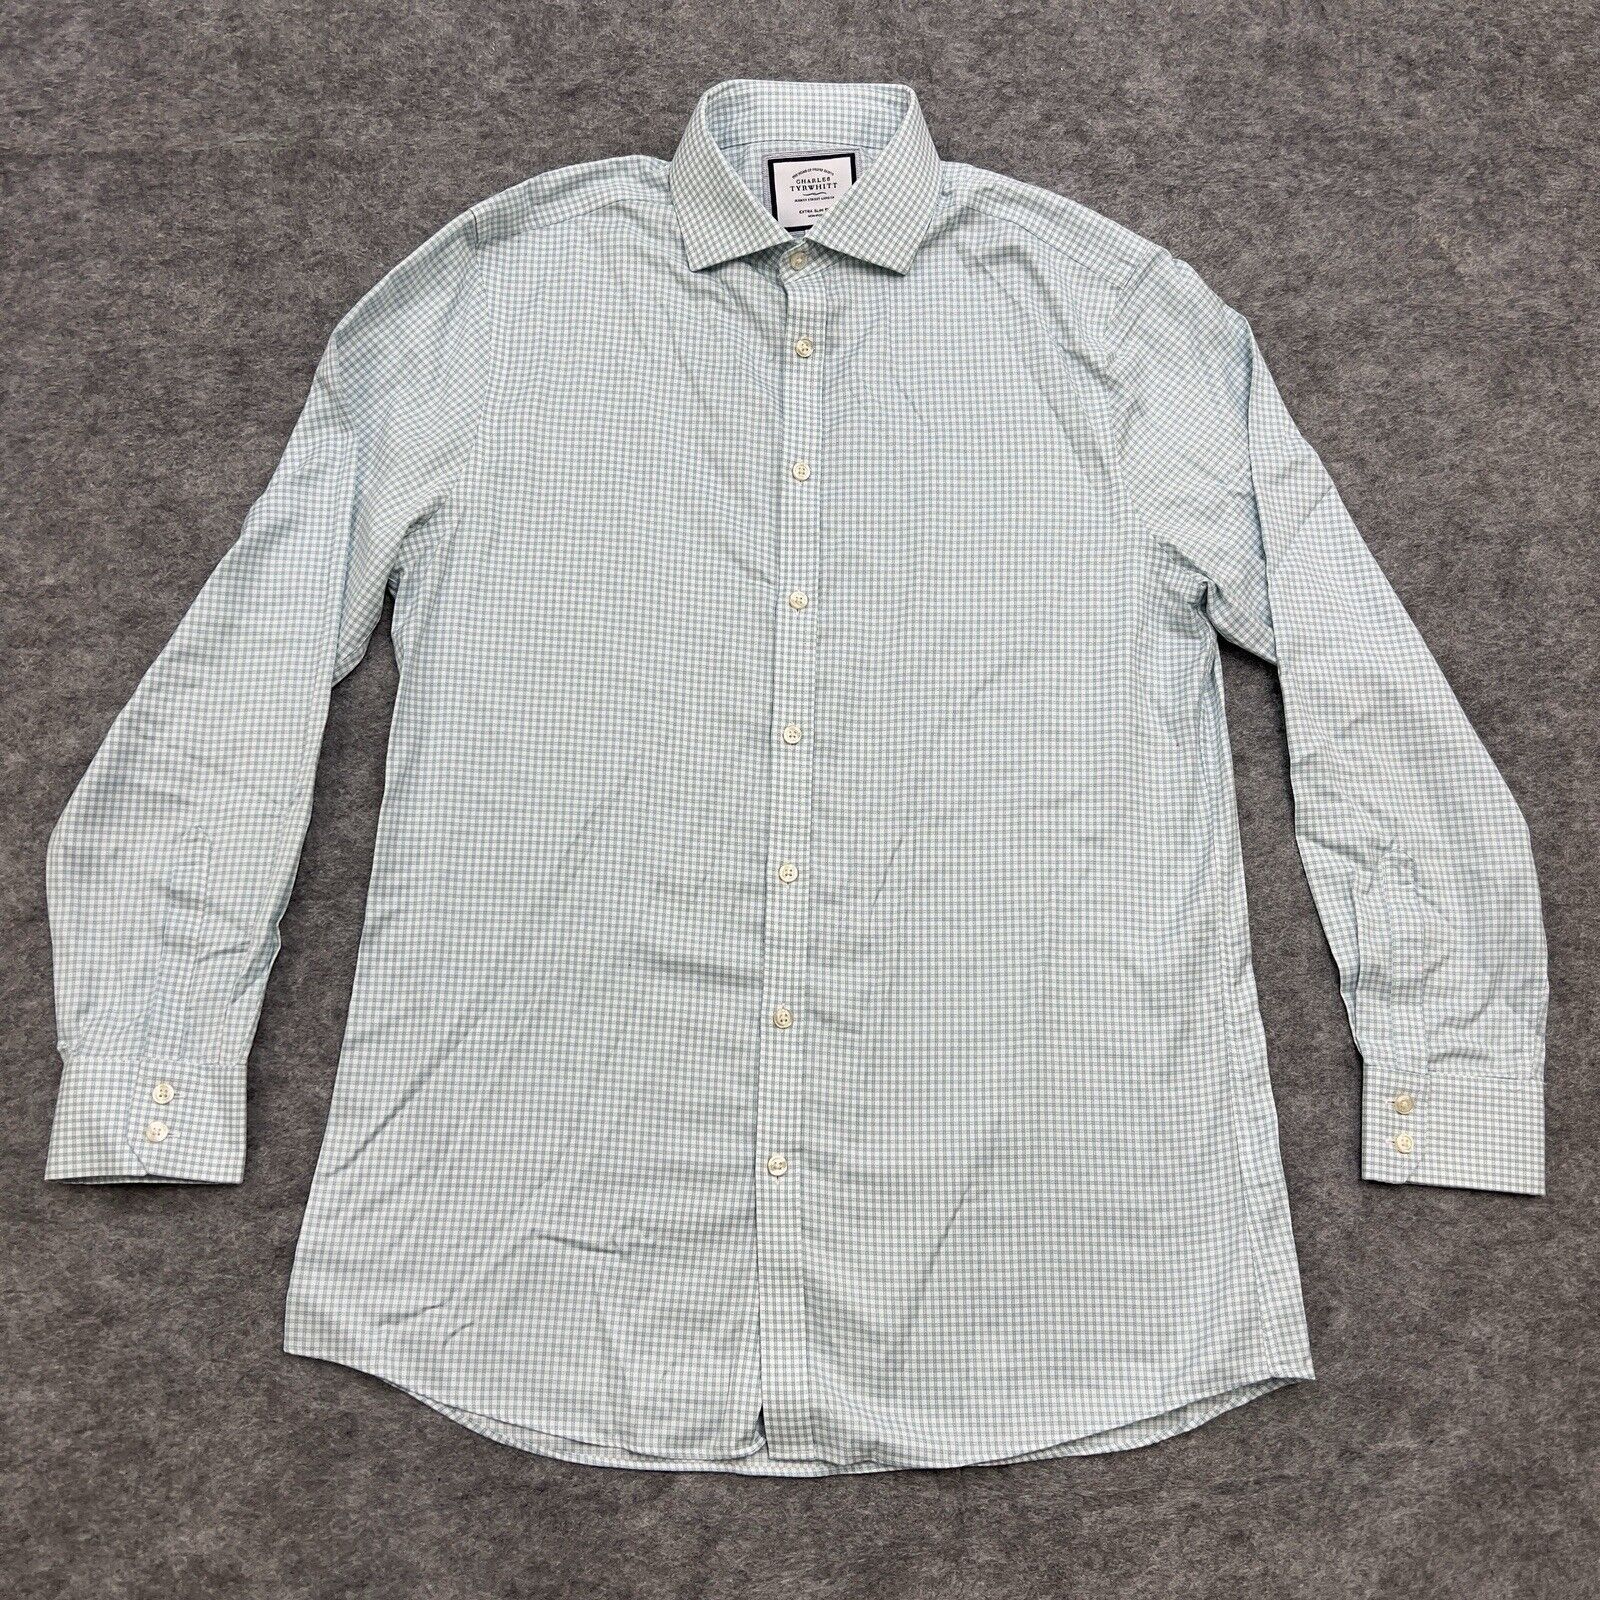 Charles Tyrwhitt Dress Shirt Mens 16.5 /35 Seafoam Grn Extra Slim Fit Non Iron